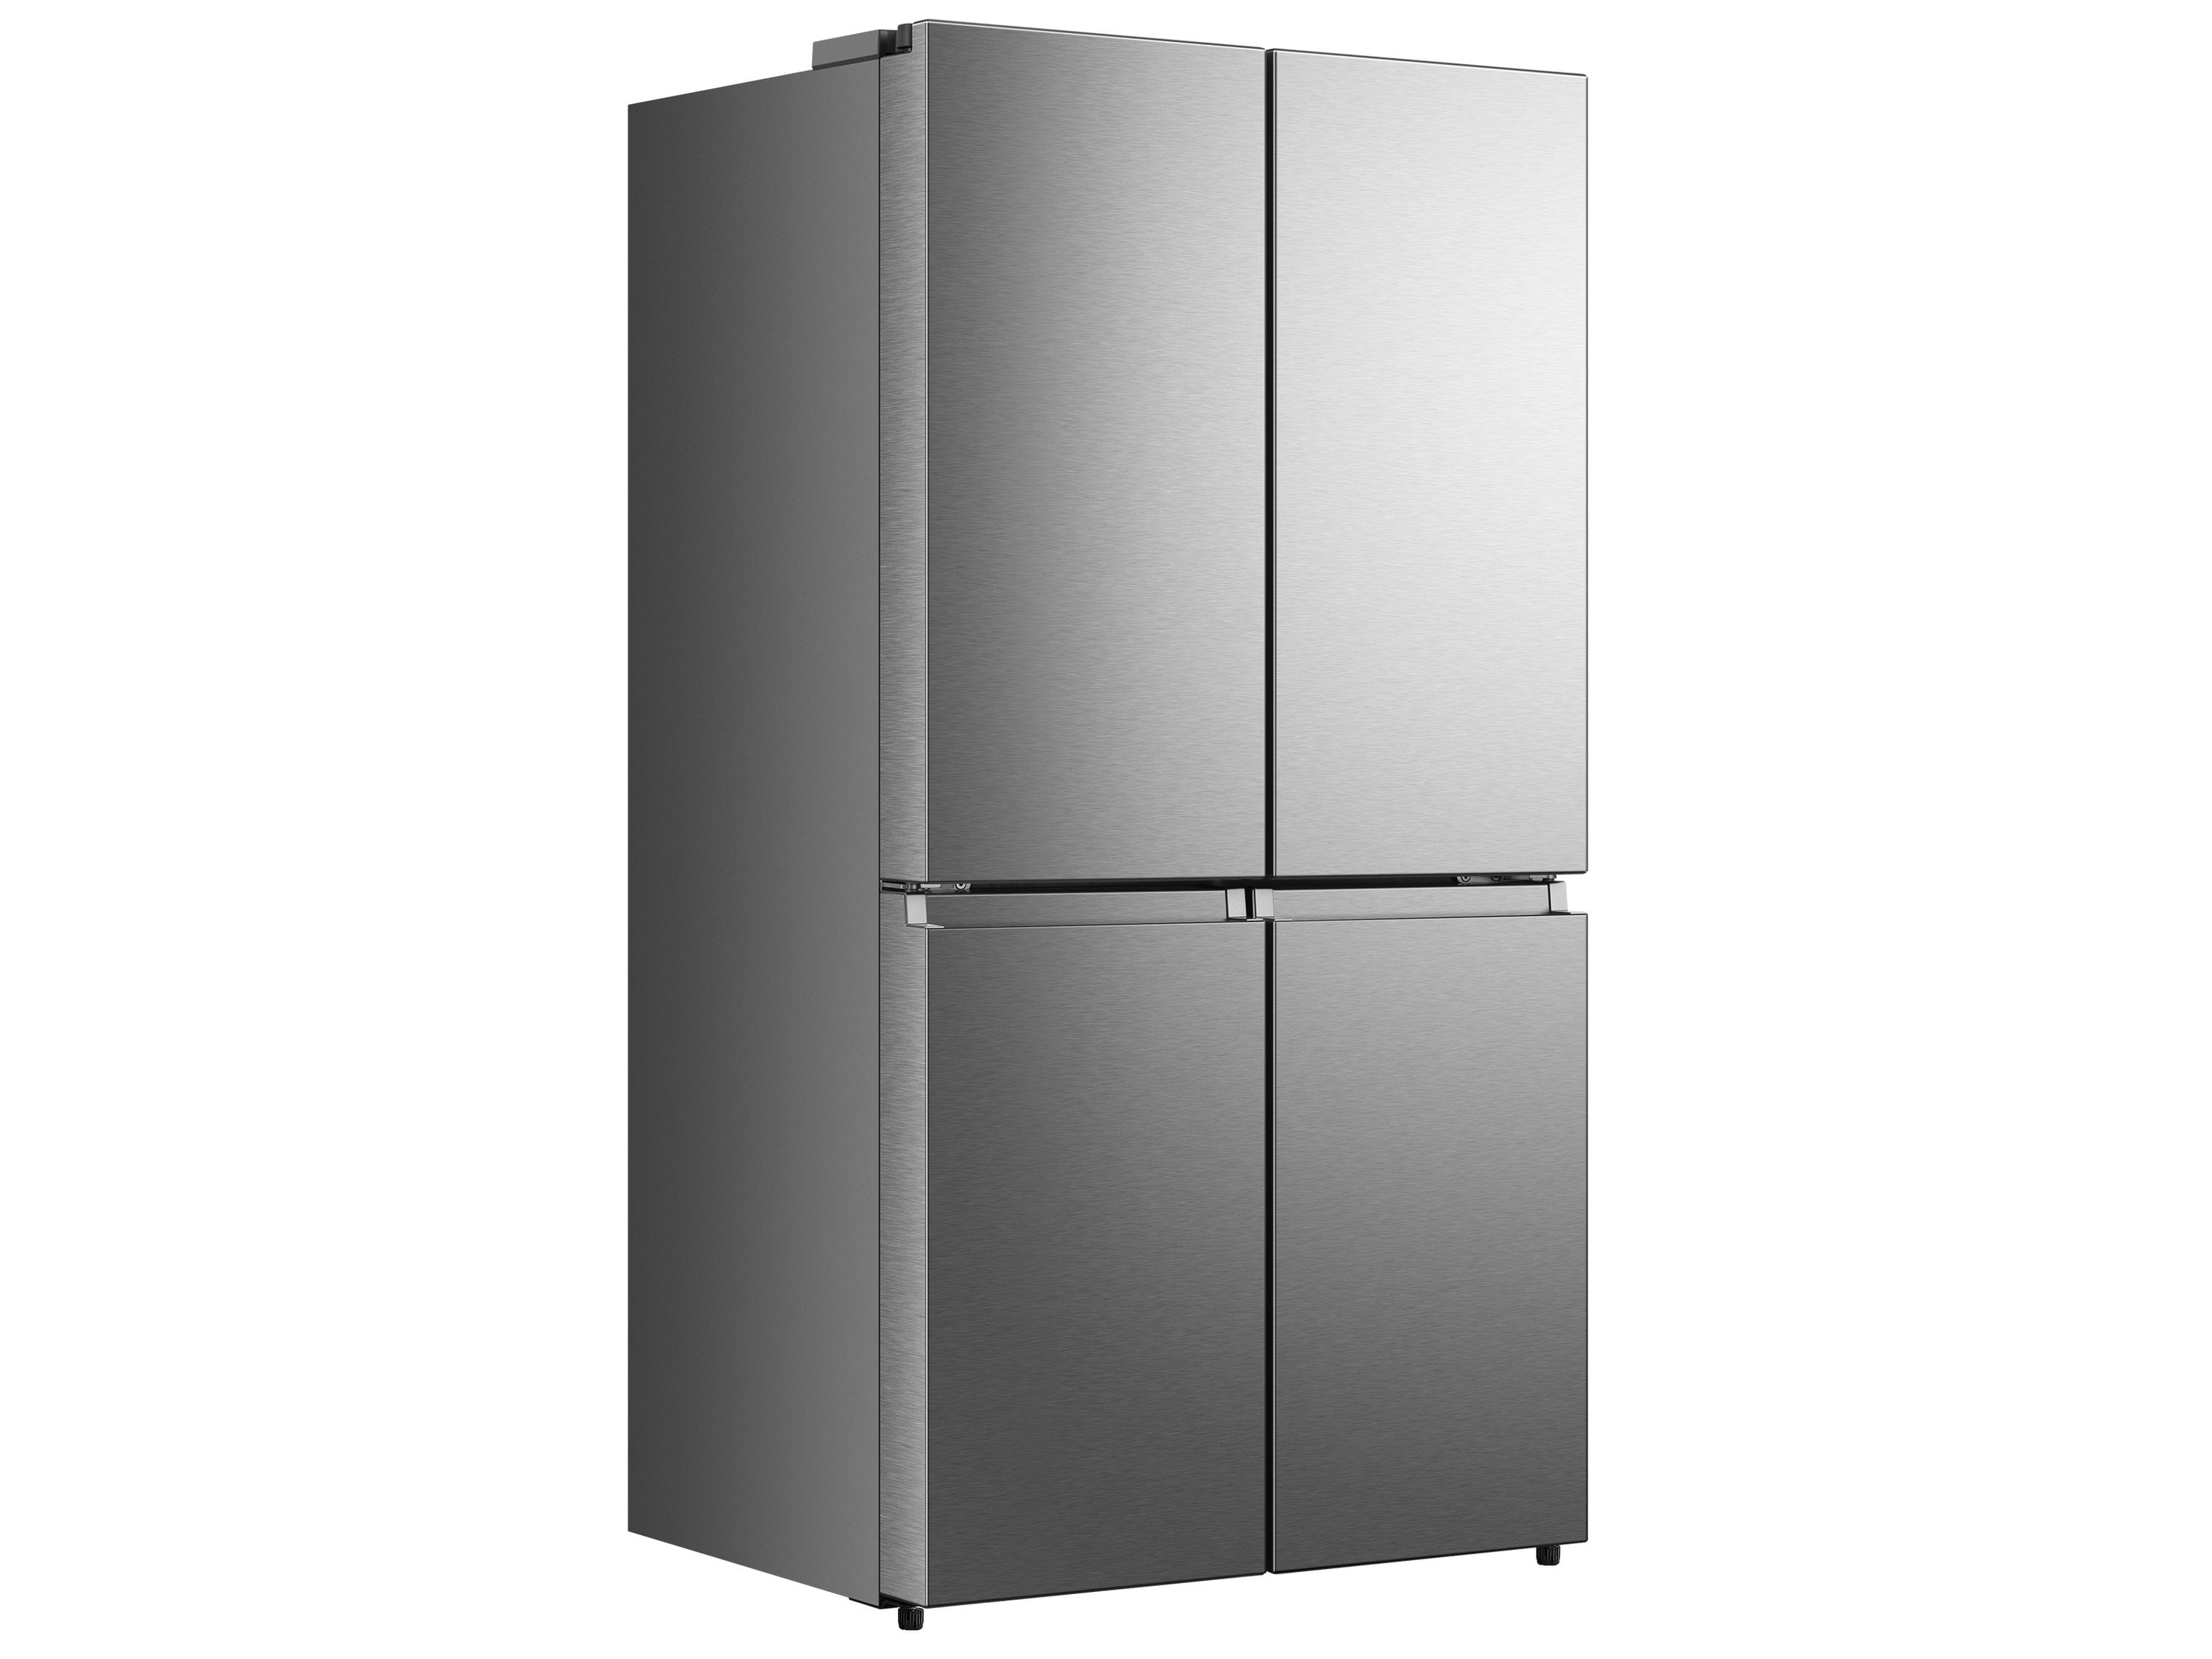 Hisense 21.6-cu ft 4-Door Counter-depth French Door Refrigerator with Ice  Maker (Stainless Look) in the French Door Refrigerators department at